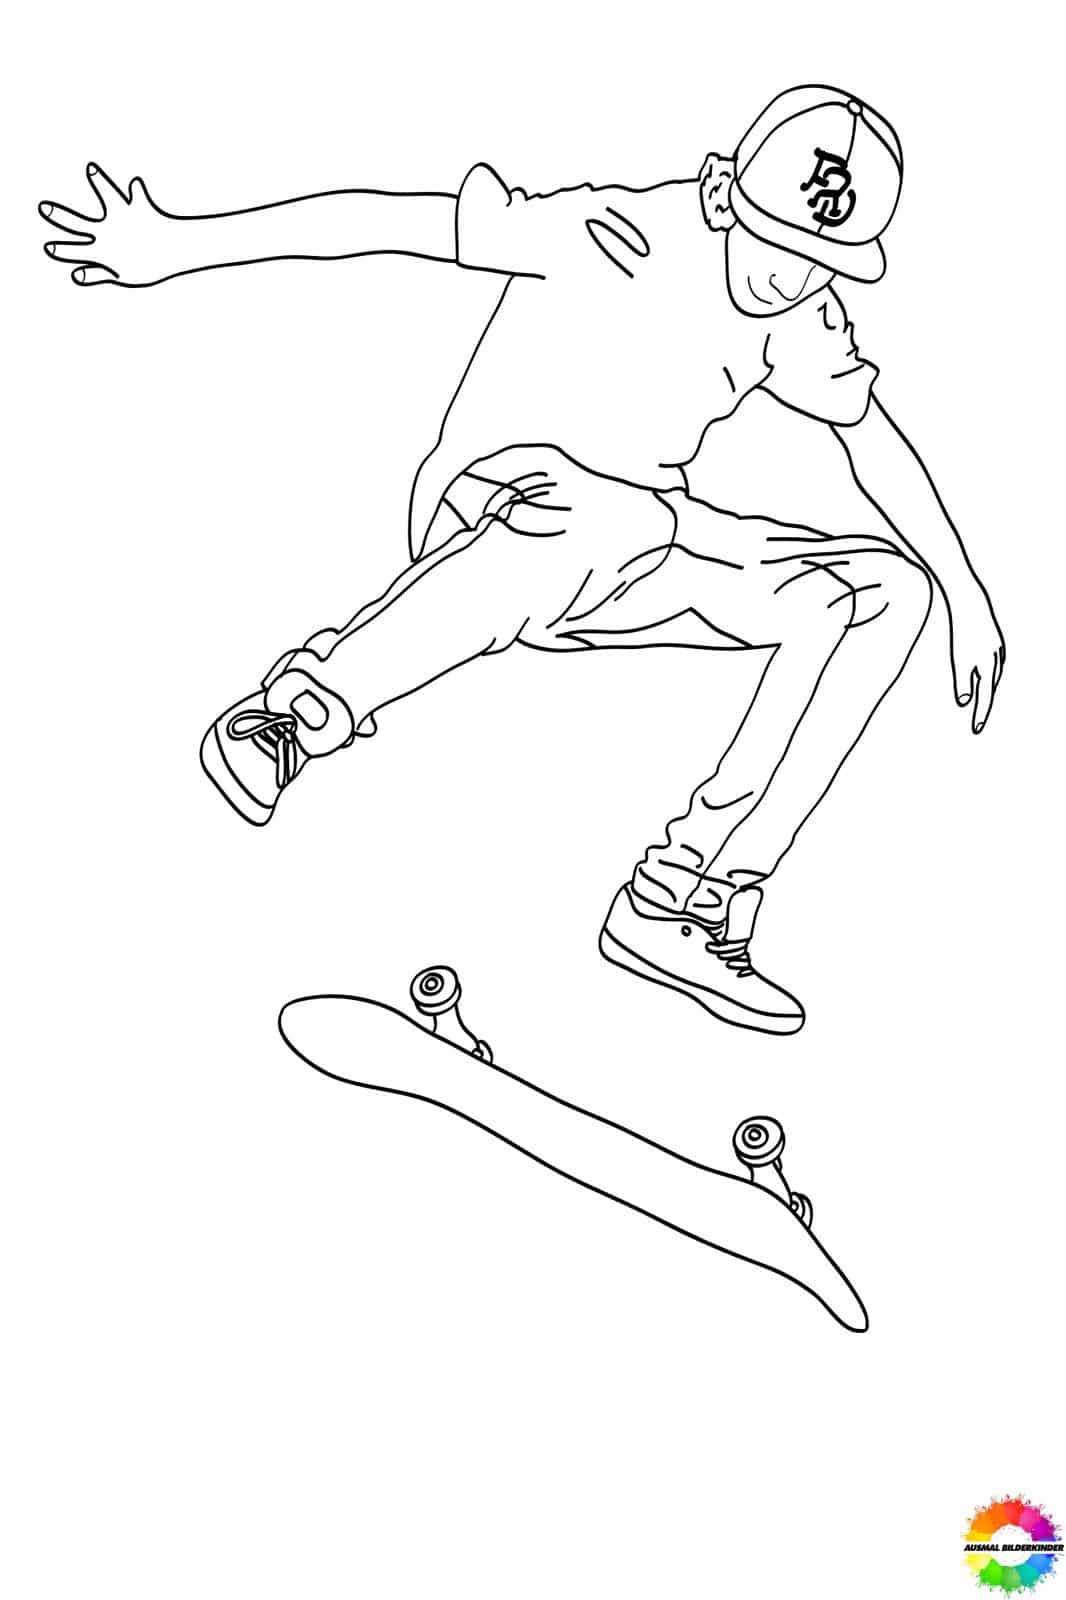 Skateboard-ausmalbilder-ausmalbilderkinder-de-2